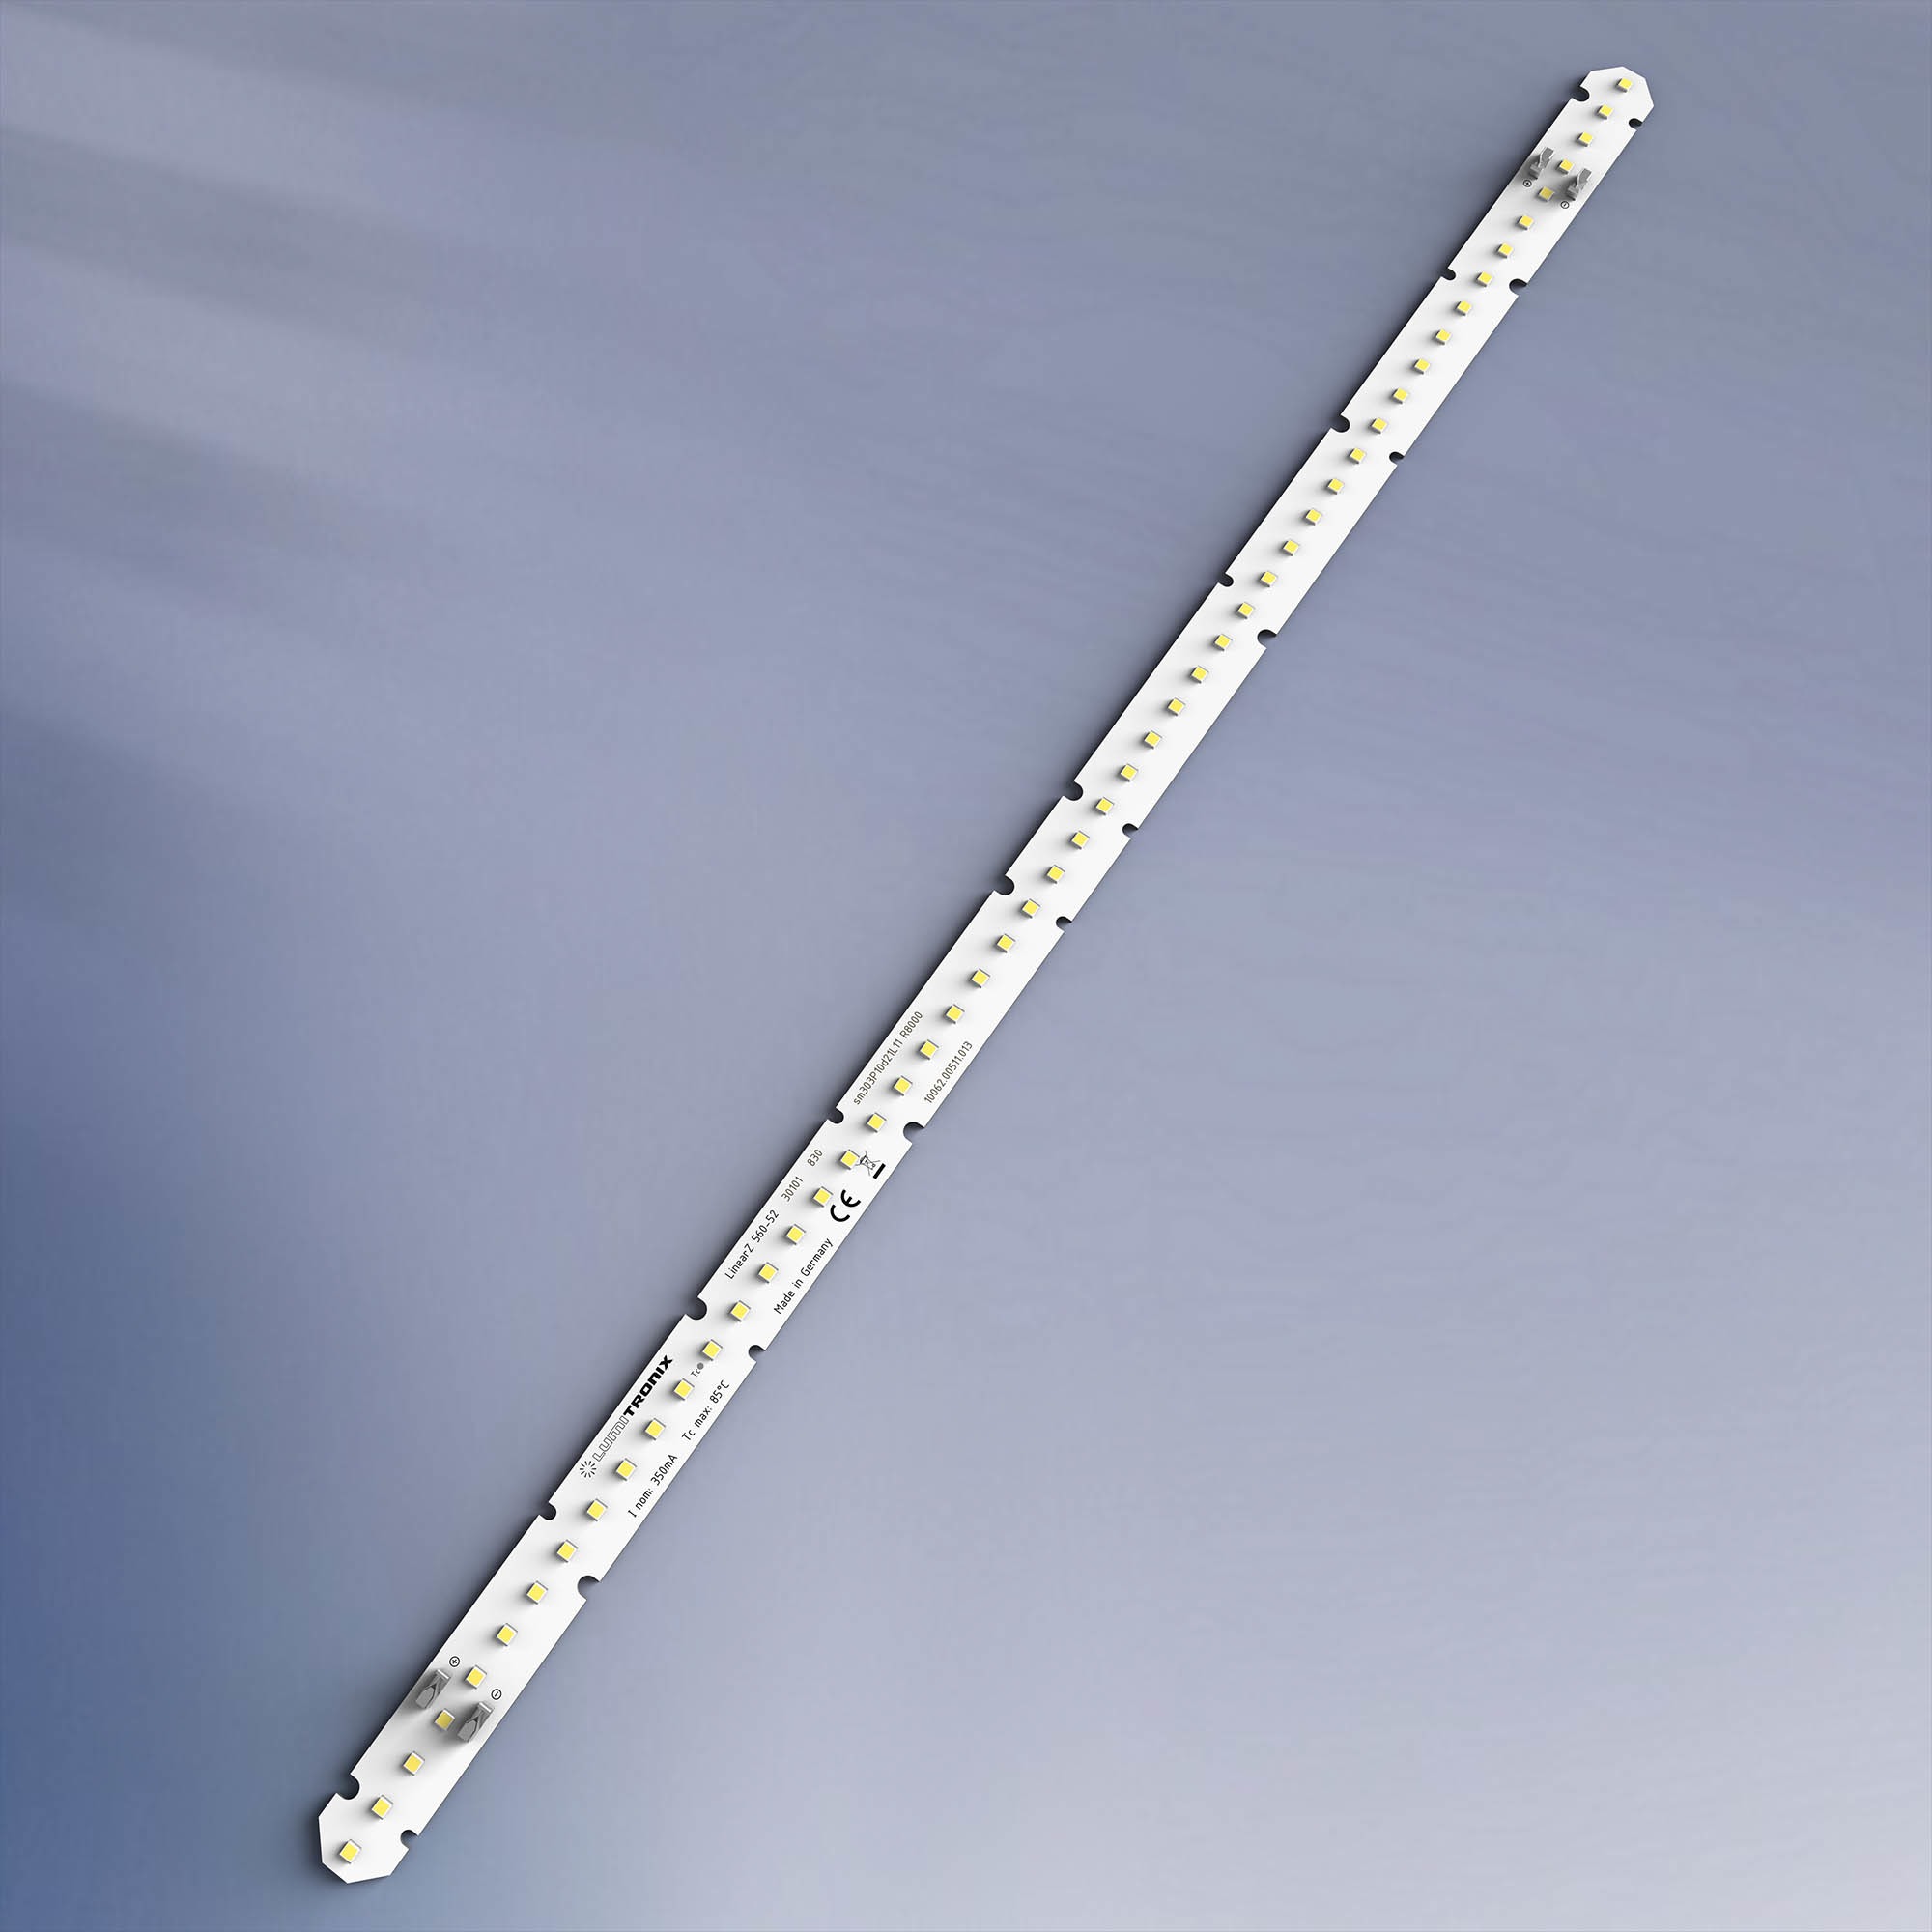 LumiBar-52-3098+ Toshiba-SSC LED Strip Sunlike CRI98 warm white 3000K 1375lm 350mA 39.6V 52 LEDs 22.05in/56cm module (748lm/ft 7.6W/ft)